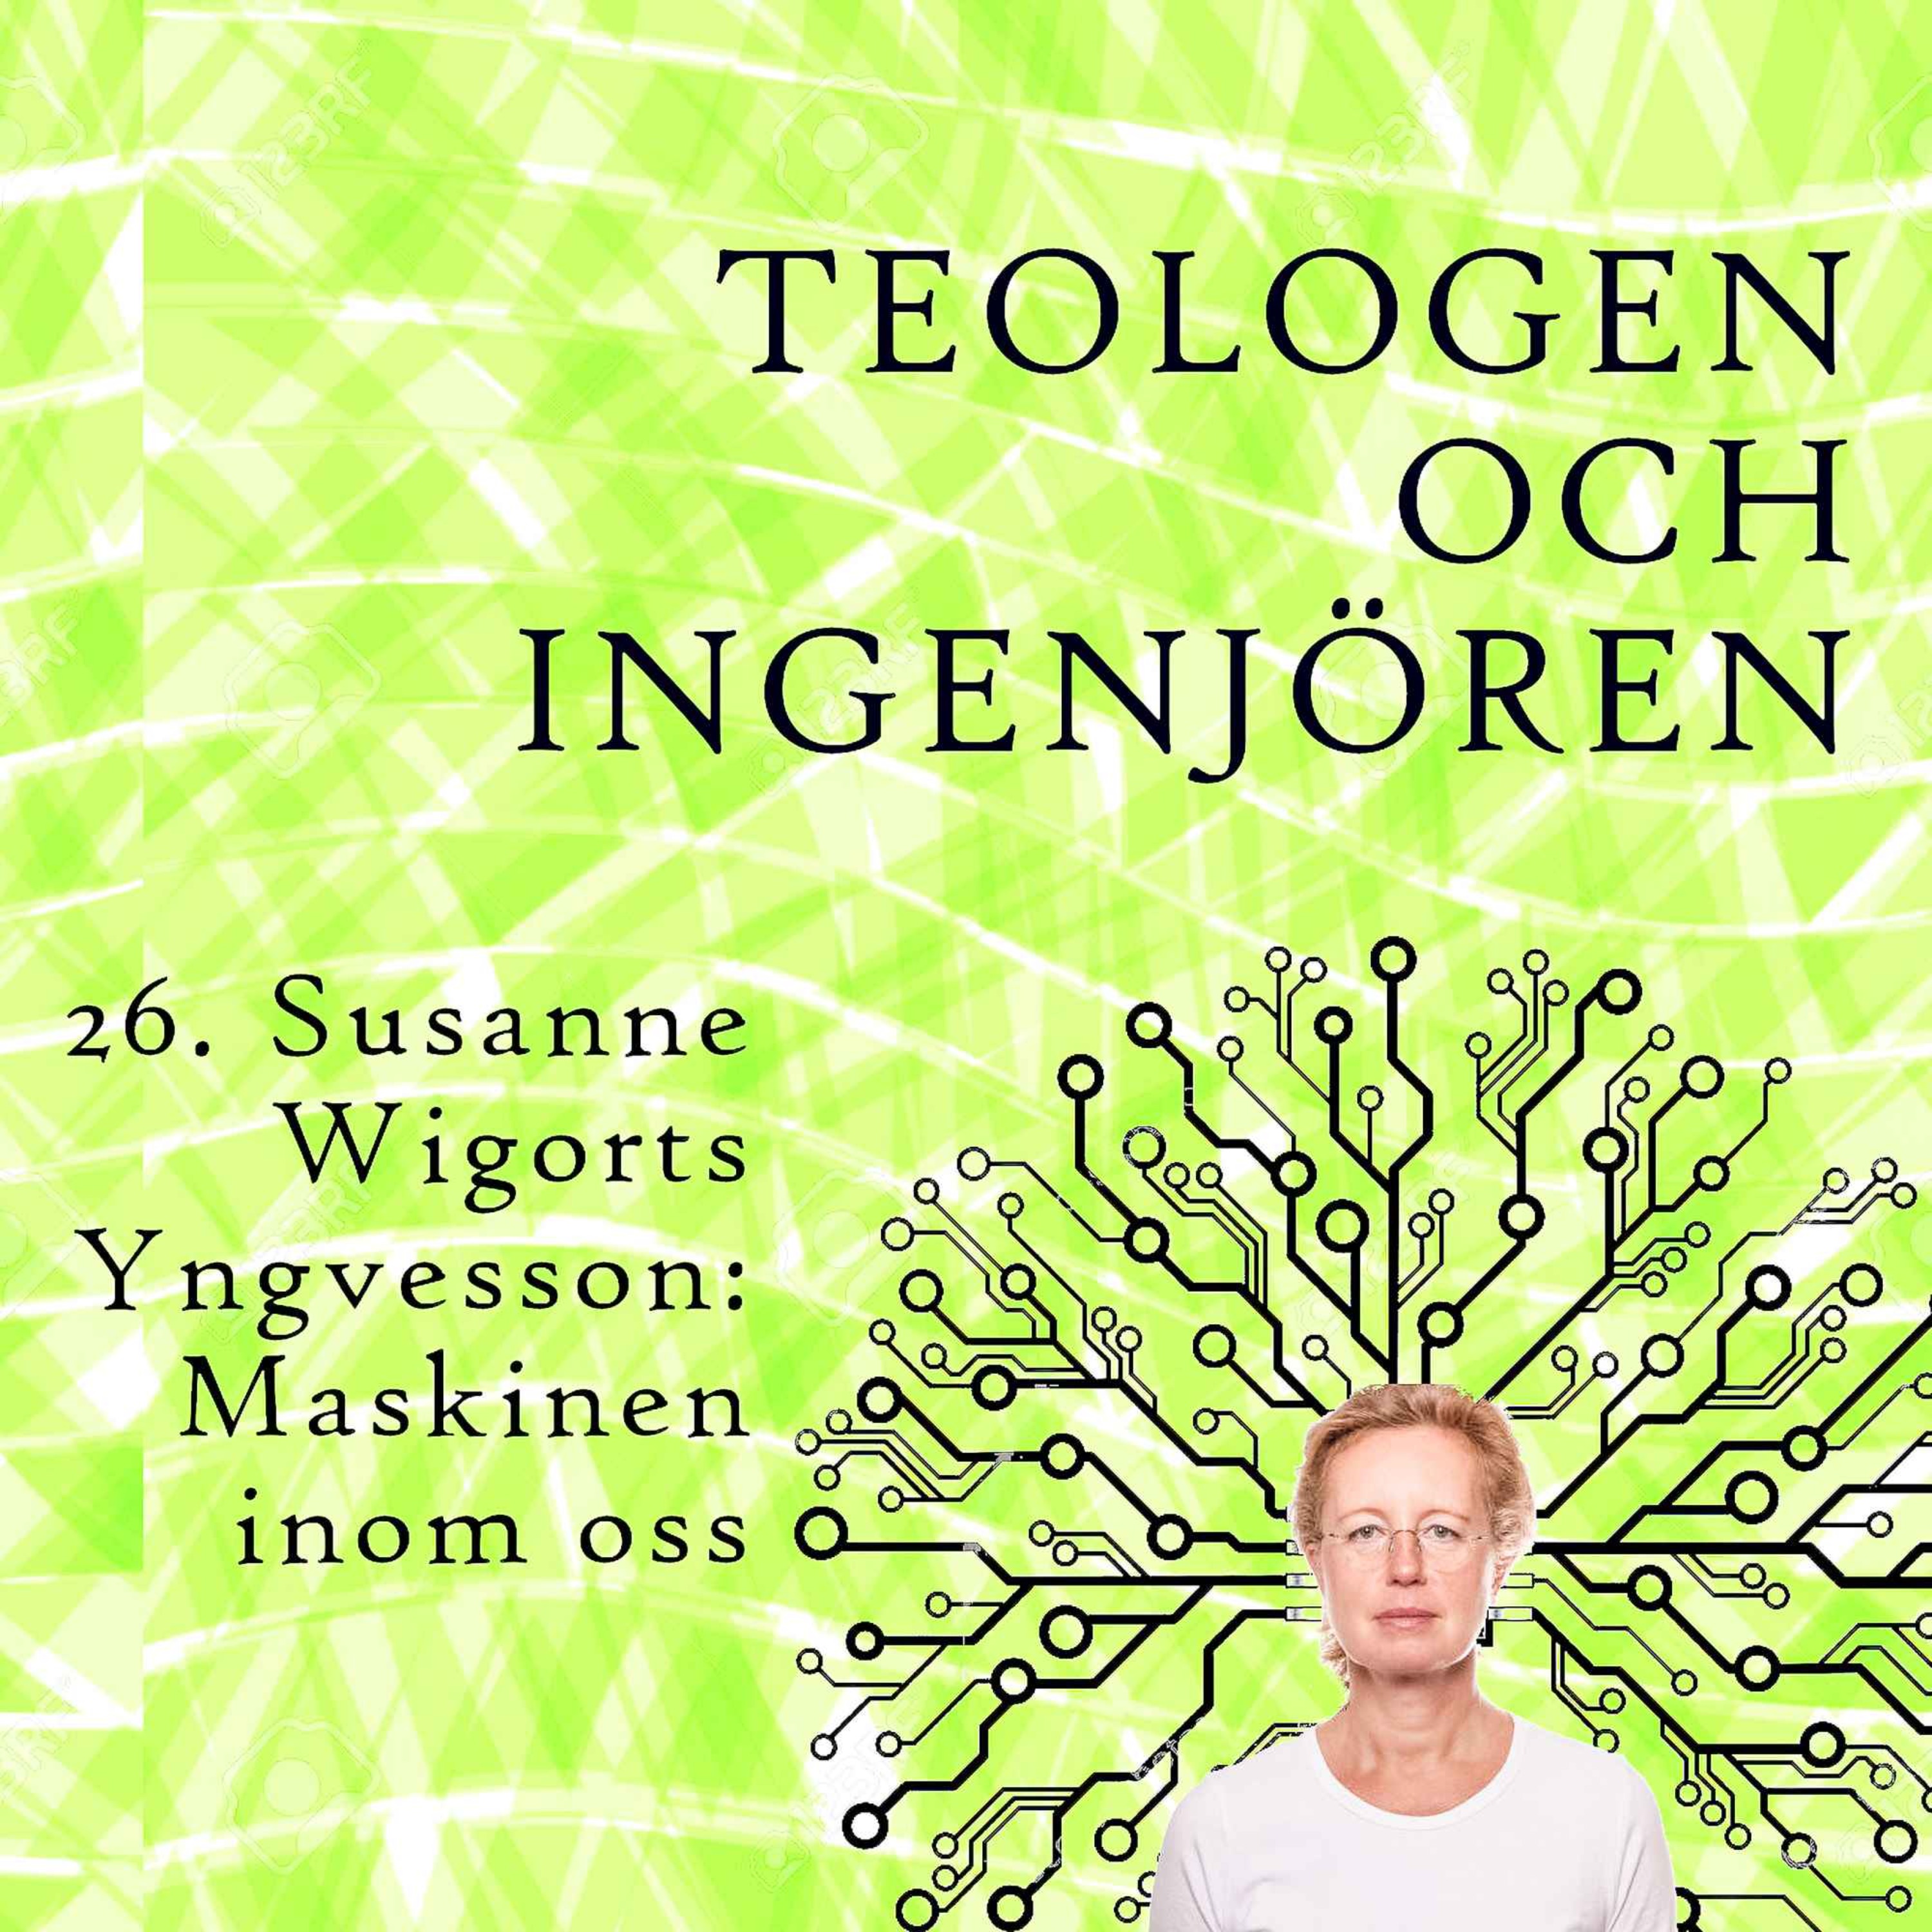 26. Susanne Wigorts Yngvesson: Maskinen inom oss